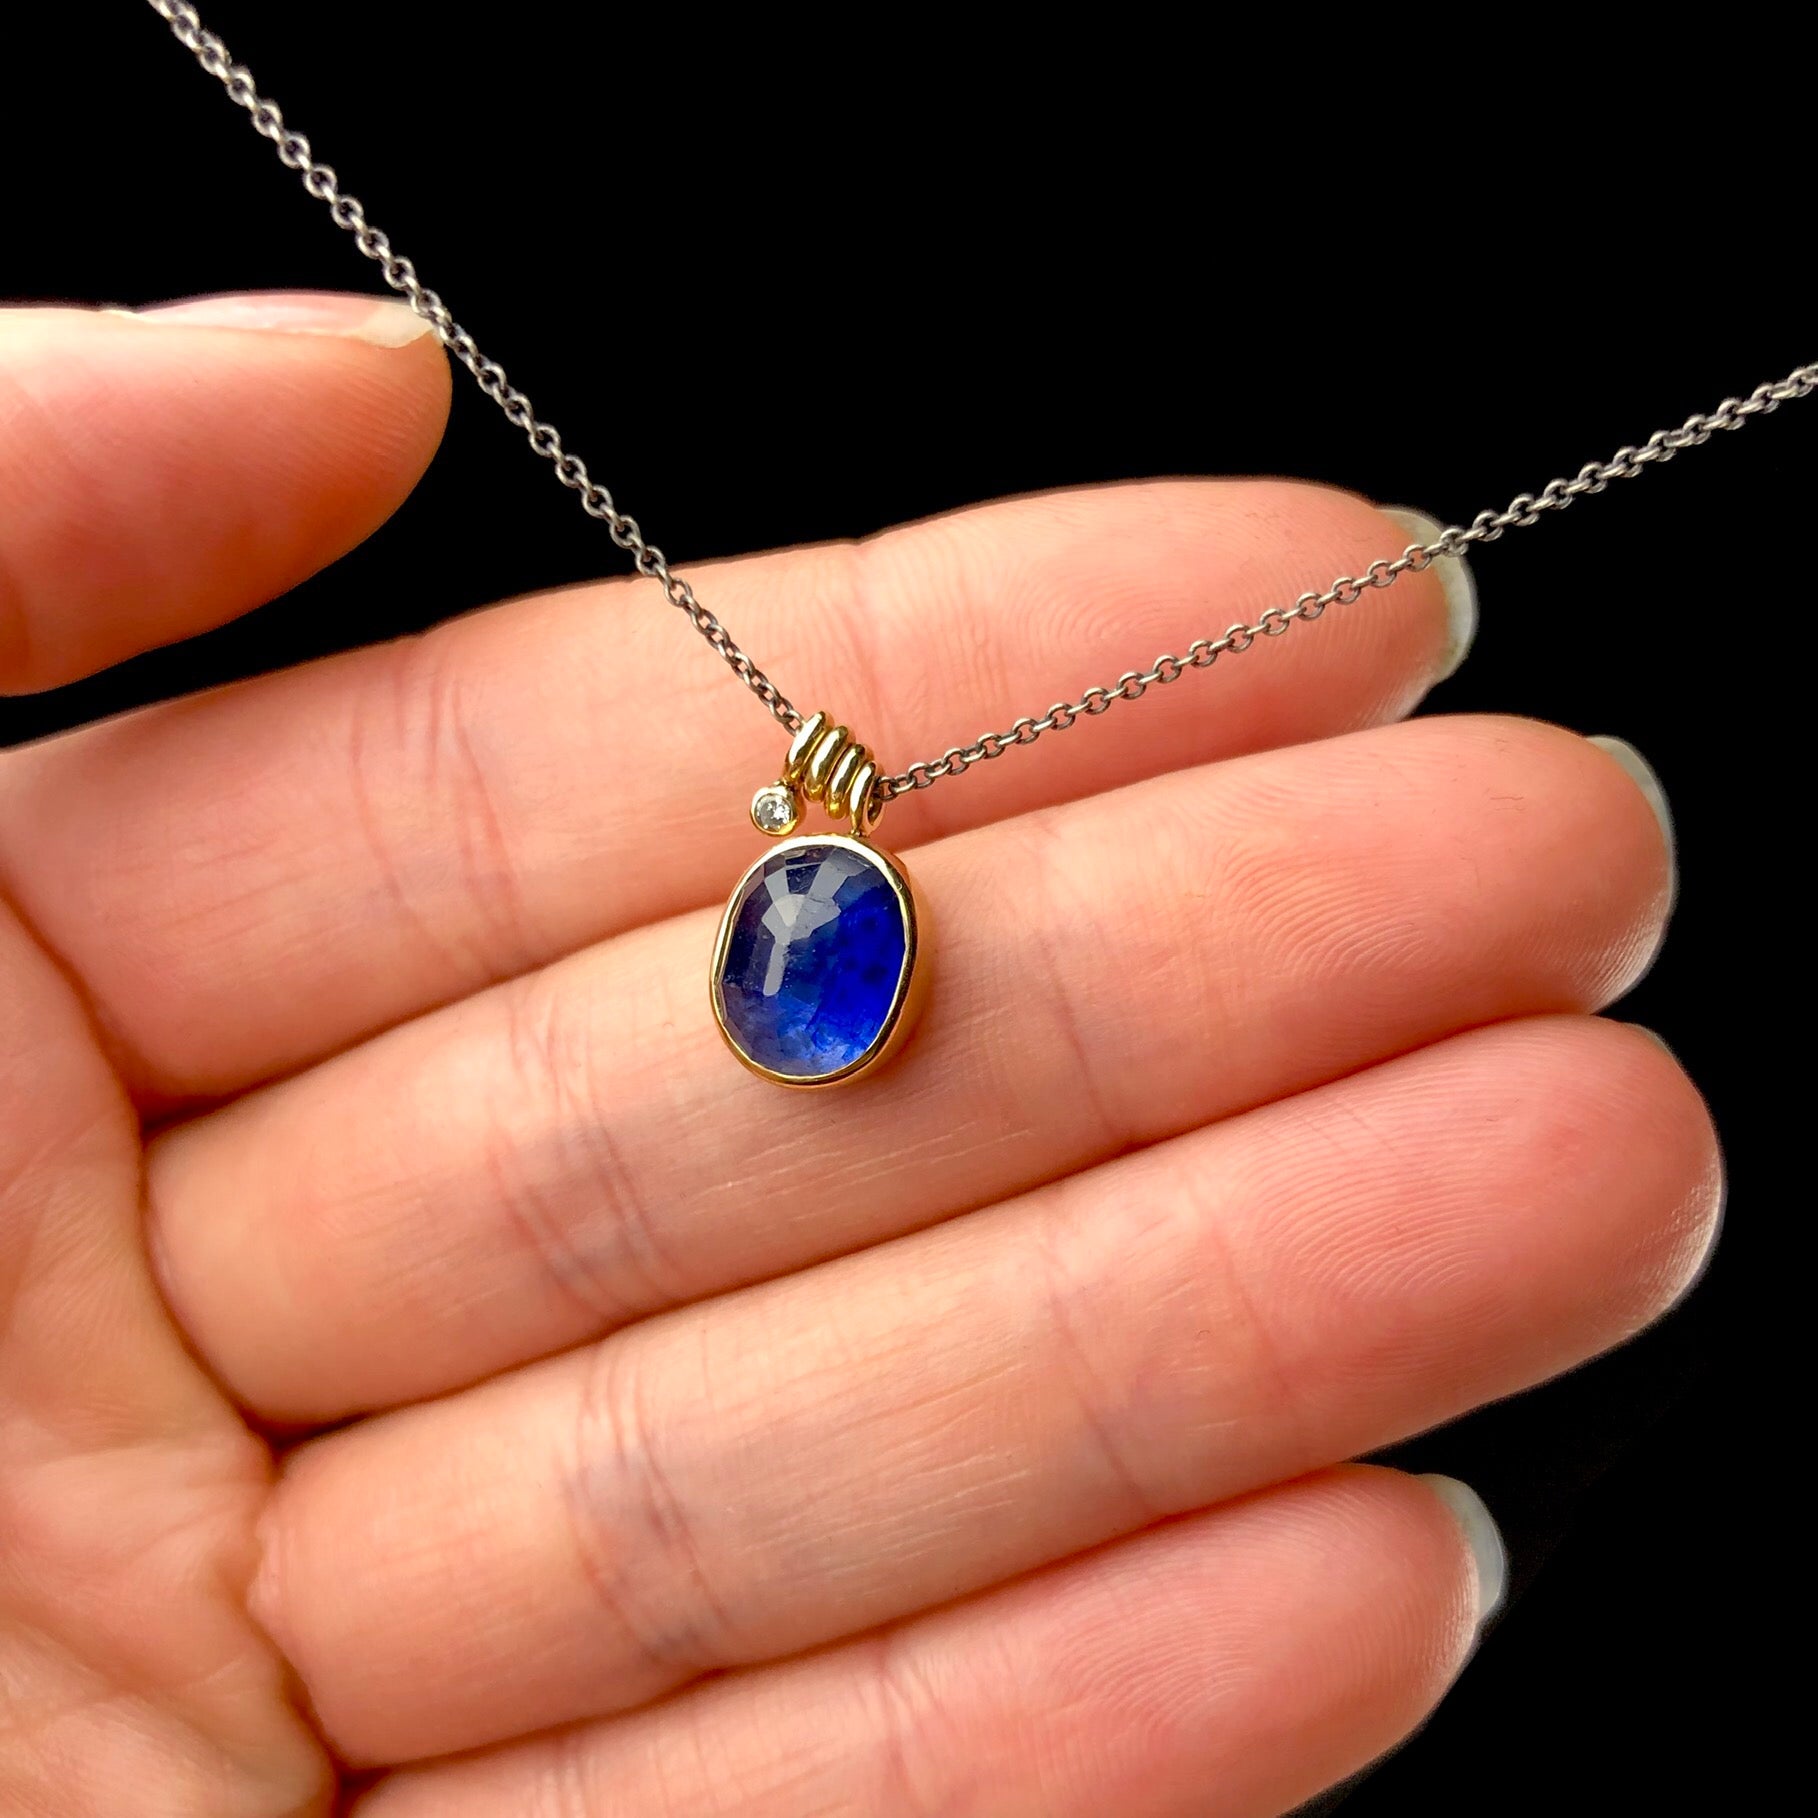 Blue Sapphire Gem Necklace shown in hand